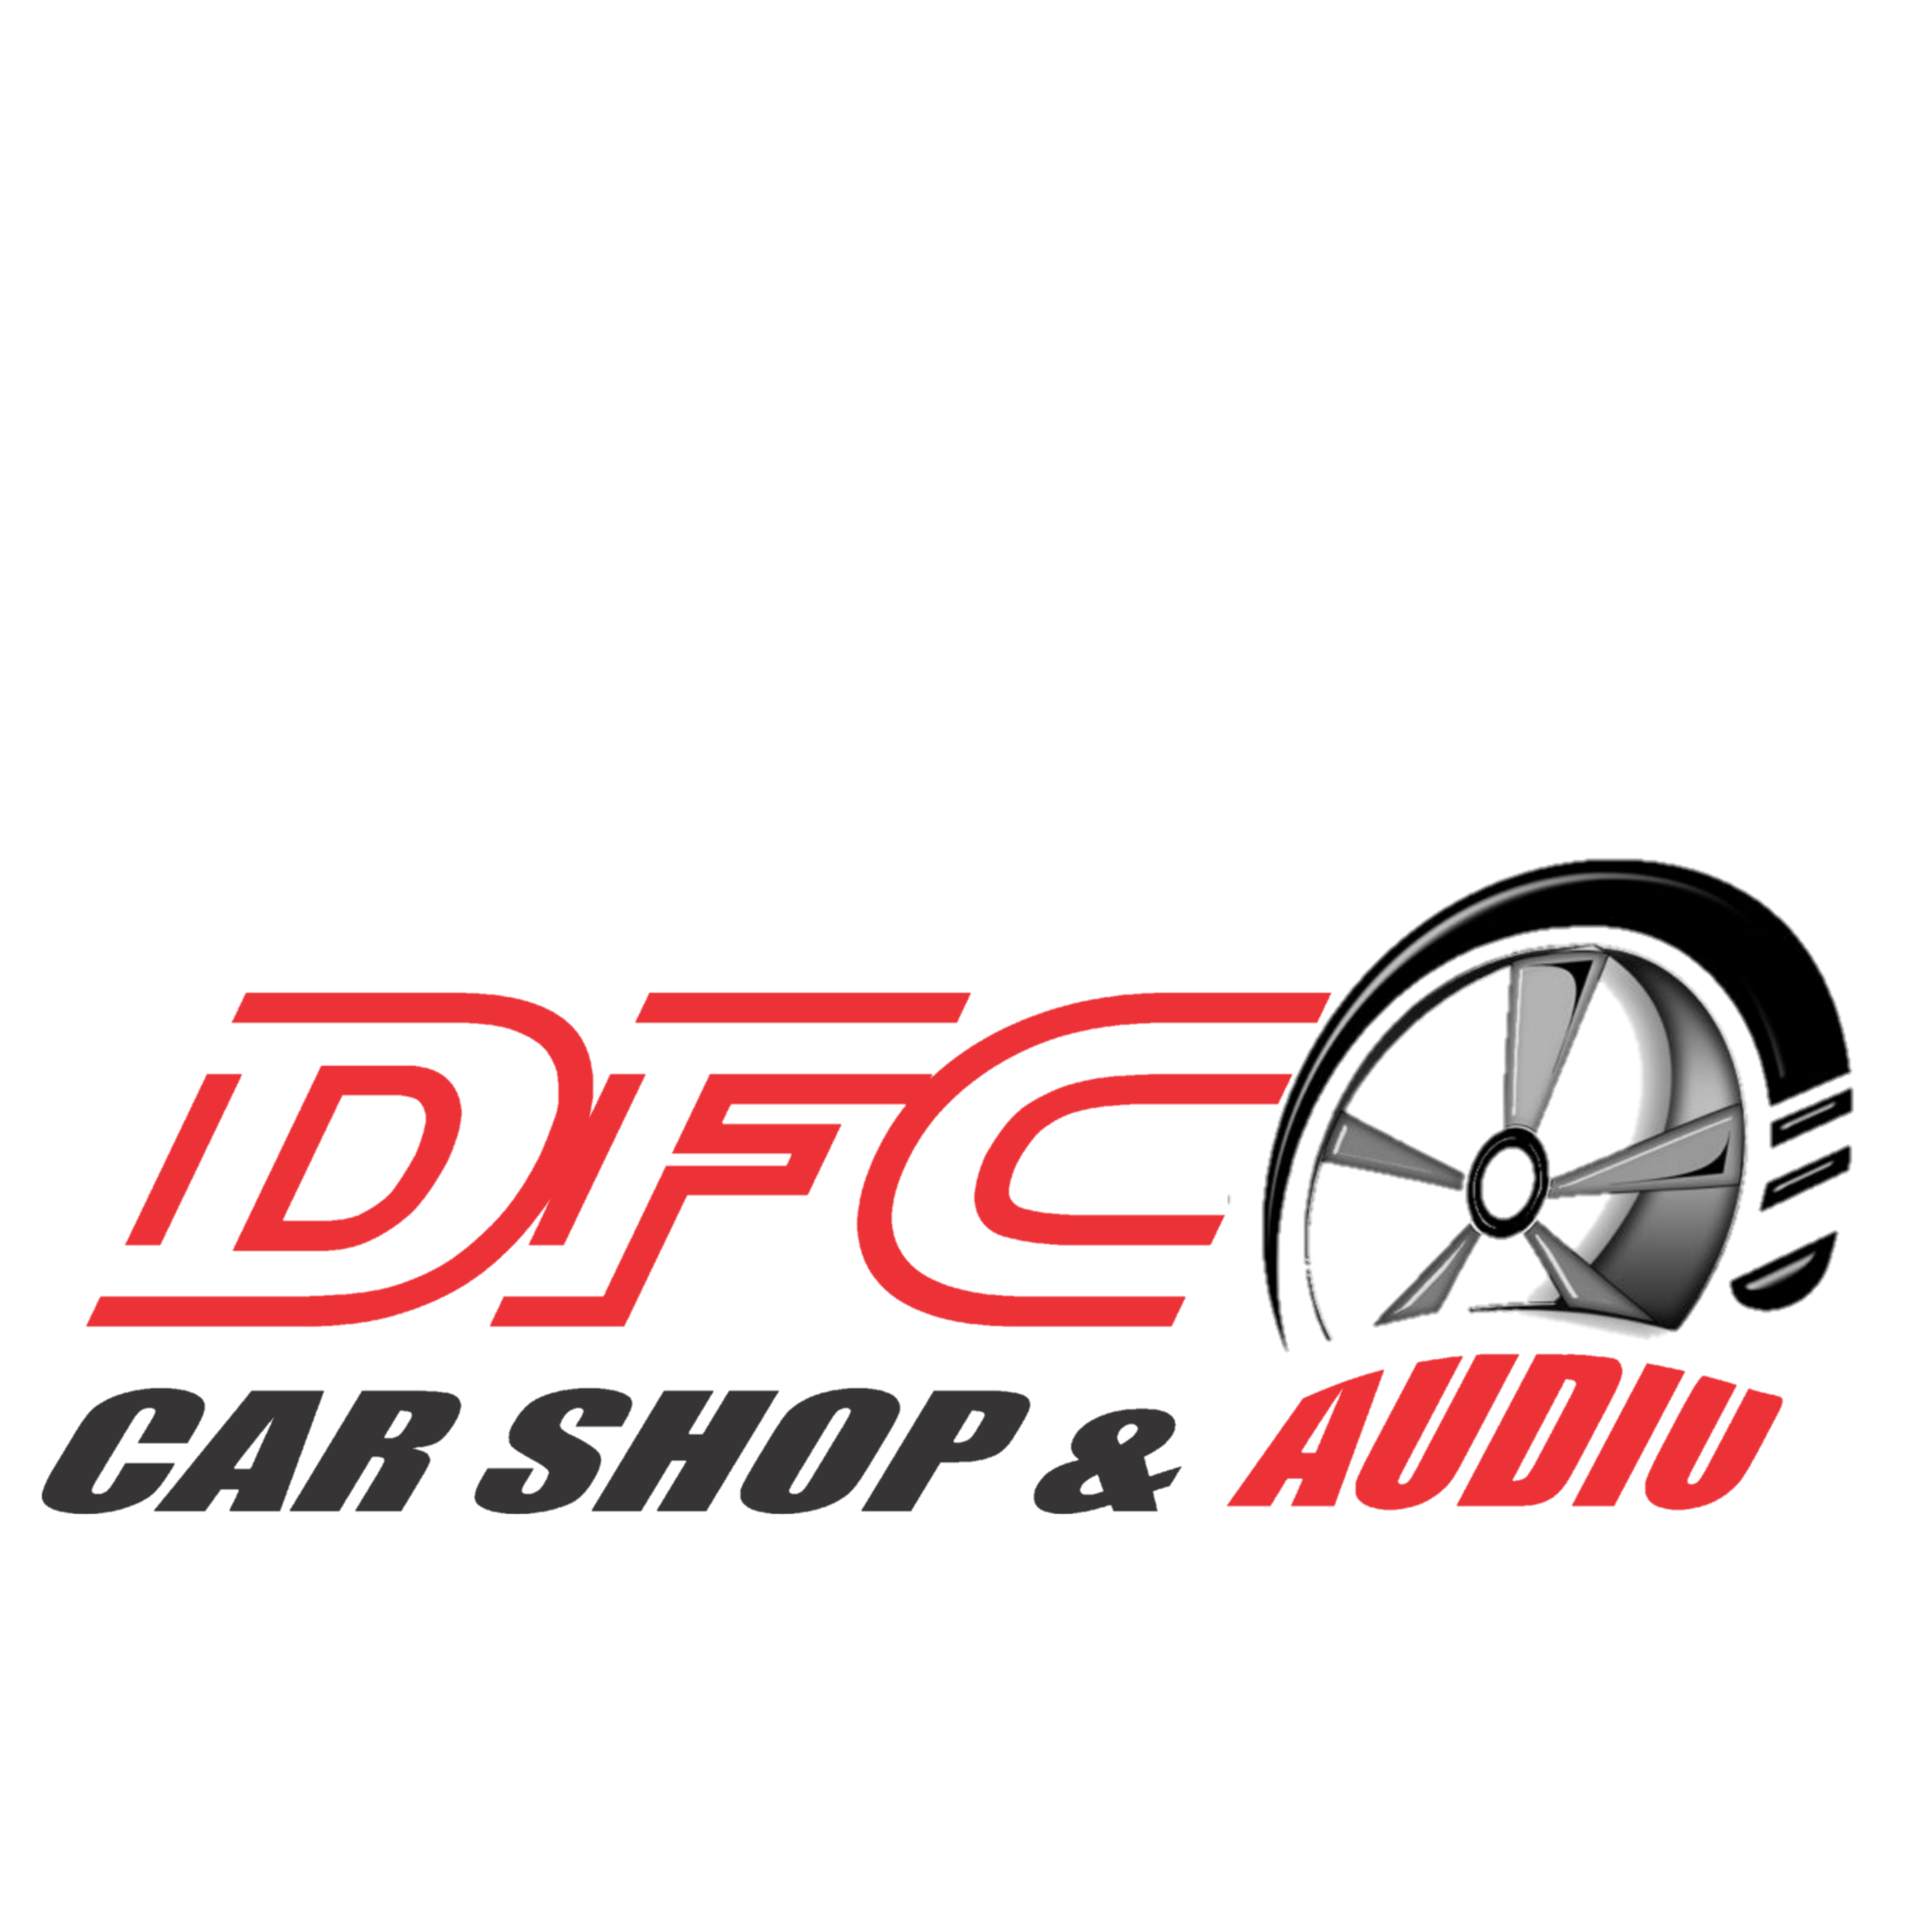 DFC CAR SHOP AND AUDIO